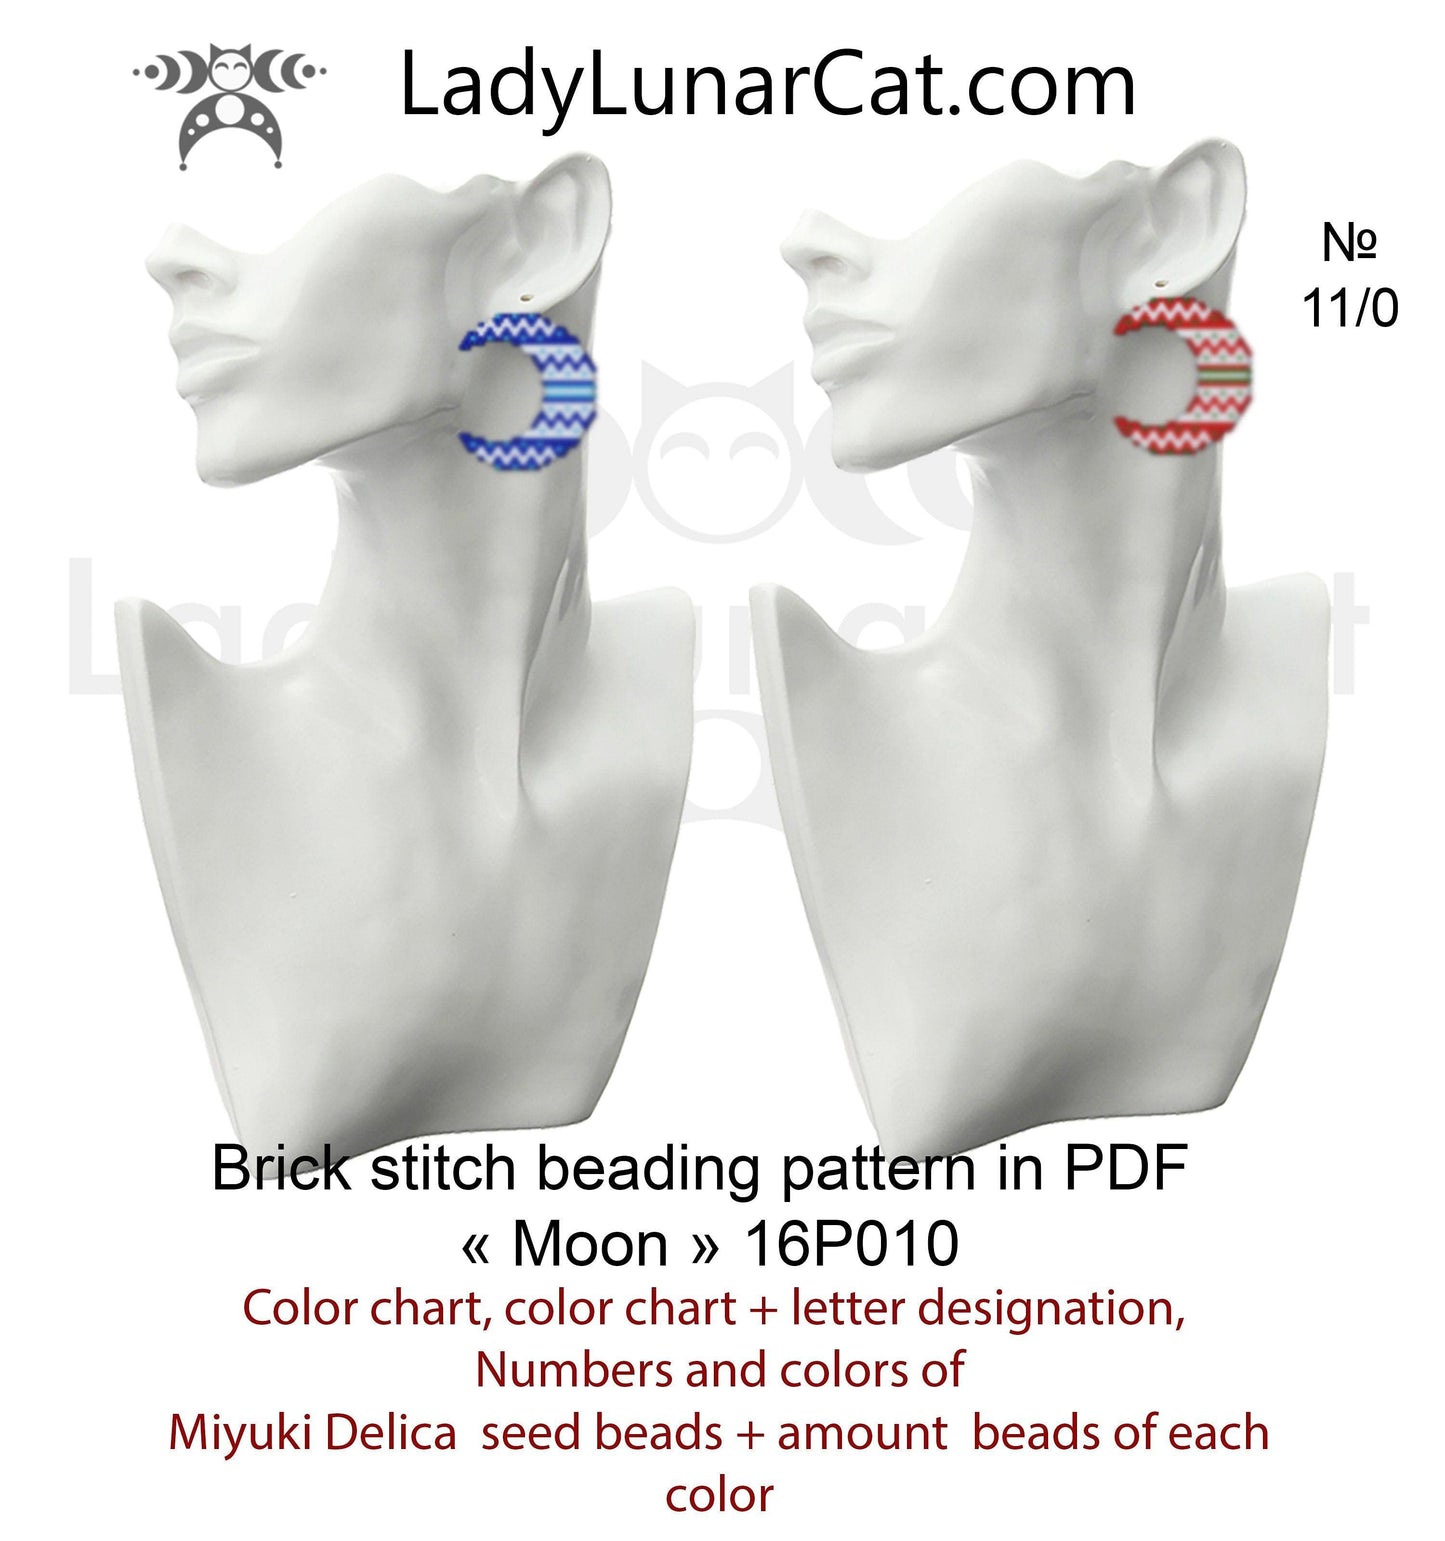 Christmas brick stitch beading patterns Moon 16P010 LadyLunarCat